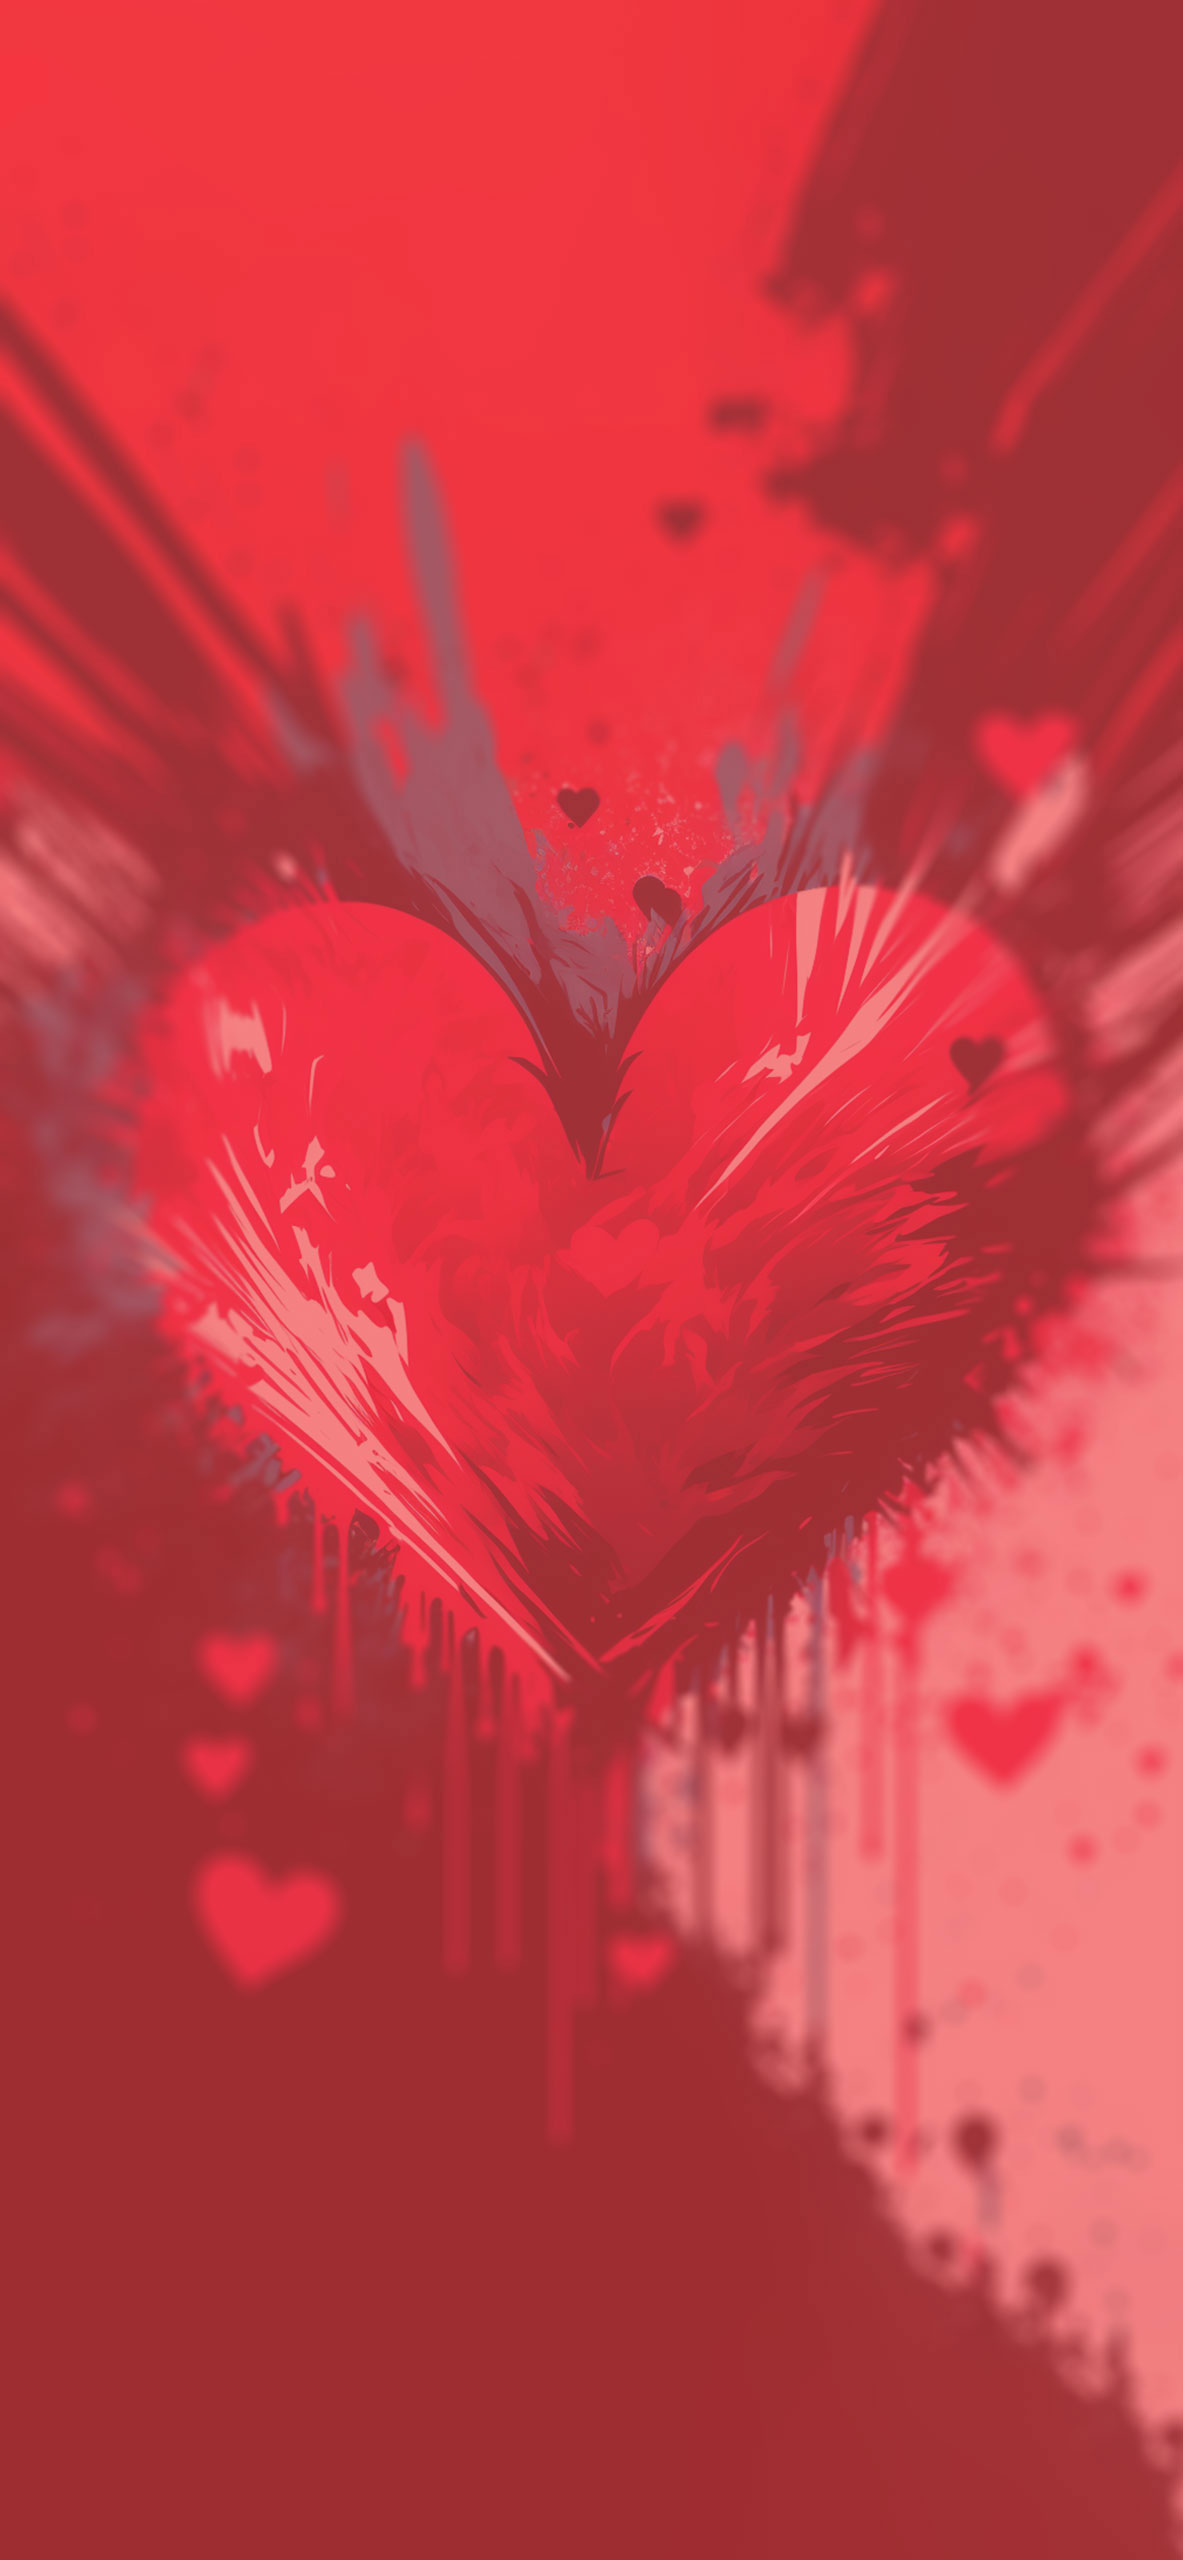 expressive love heart art background